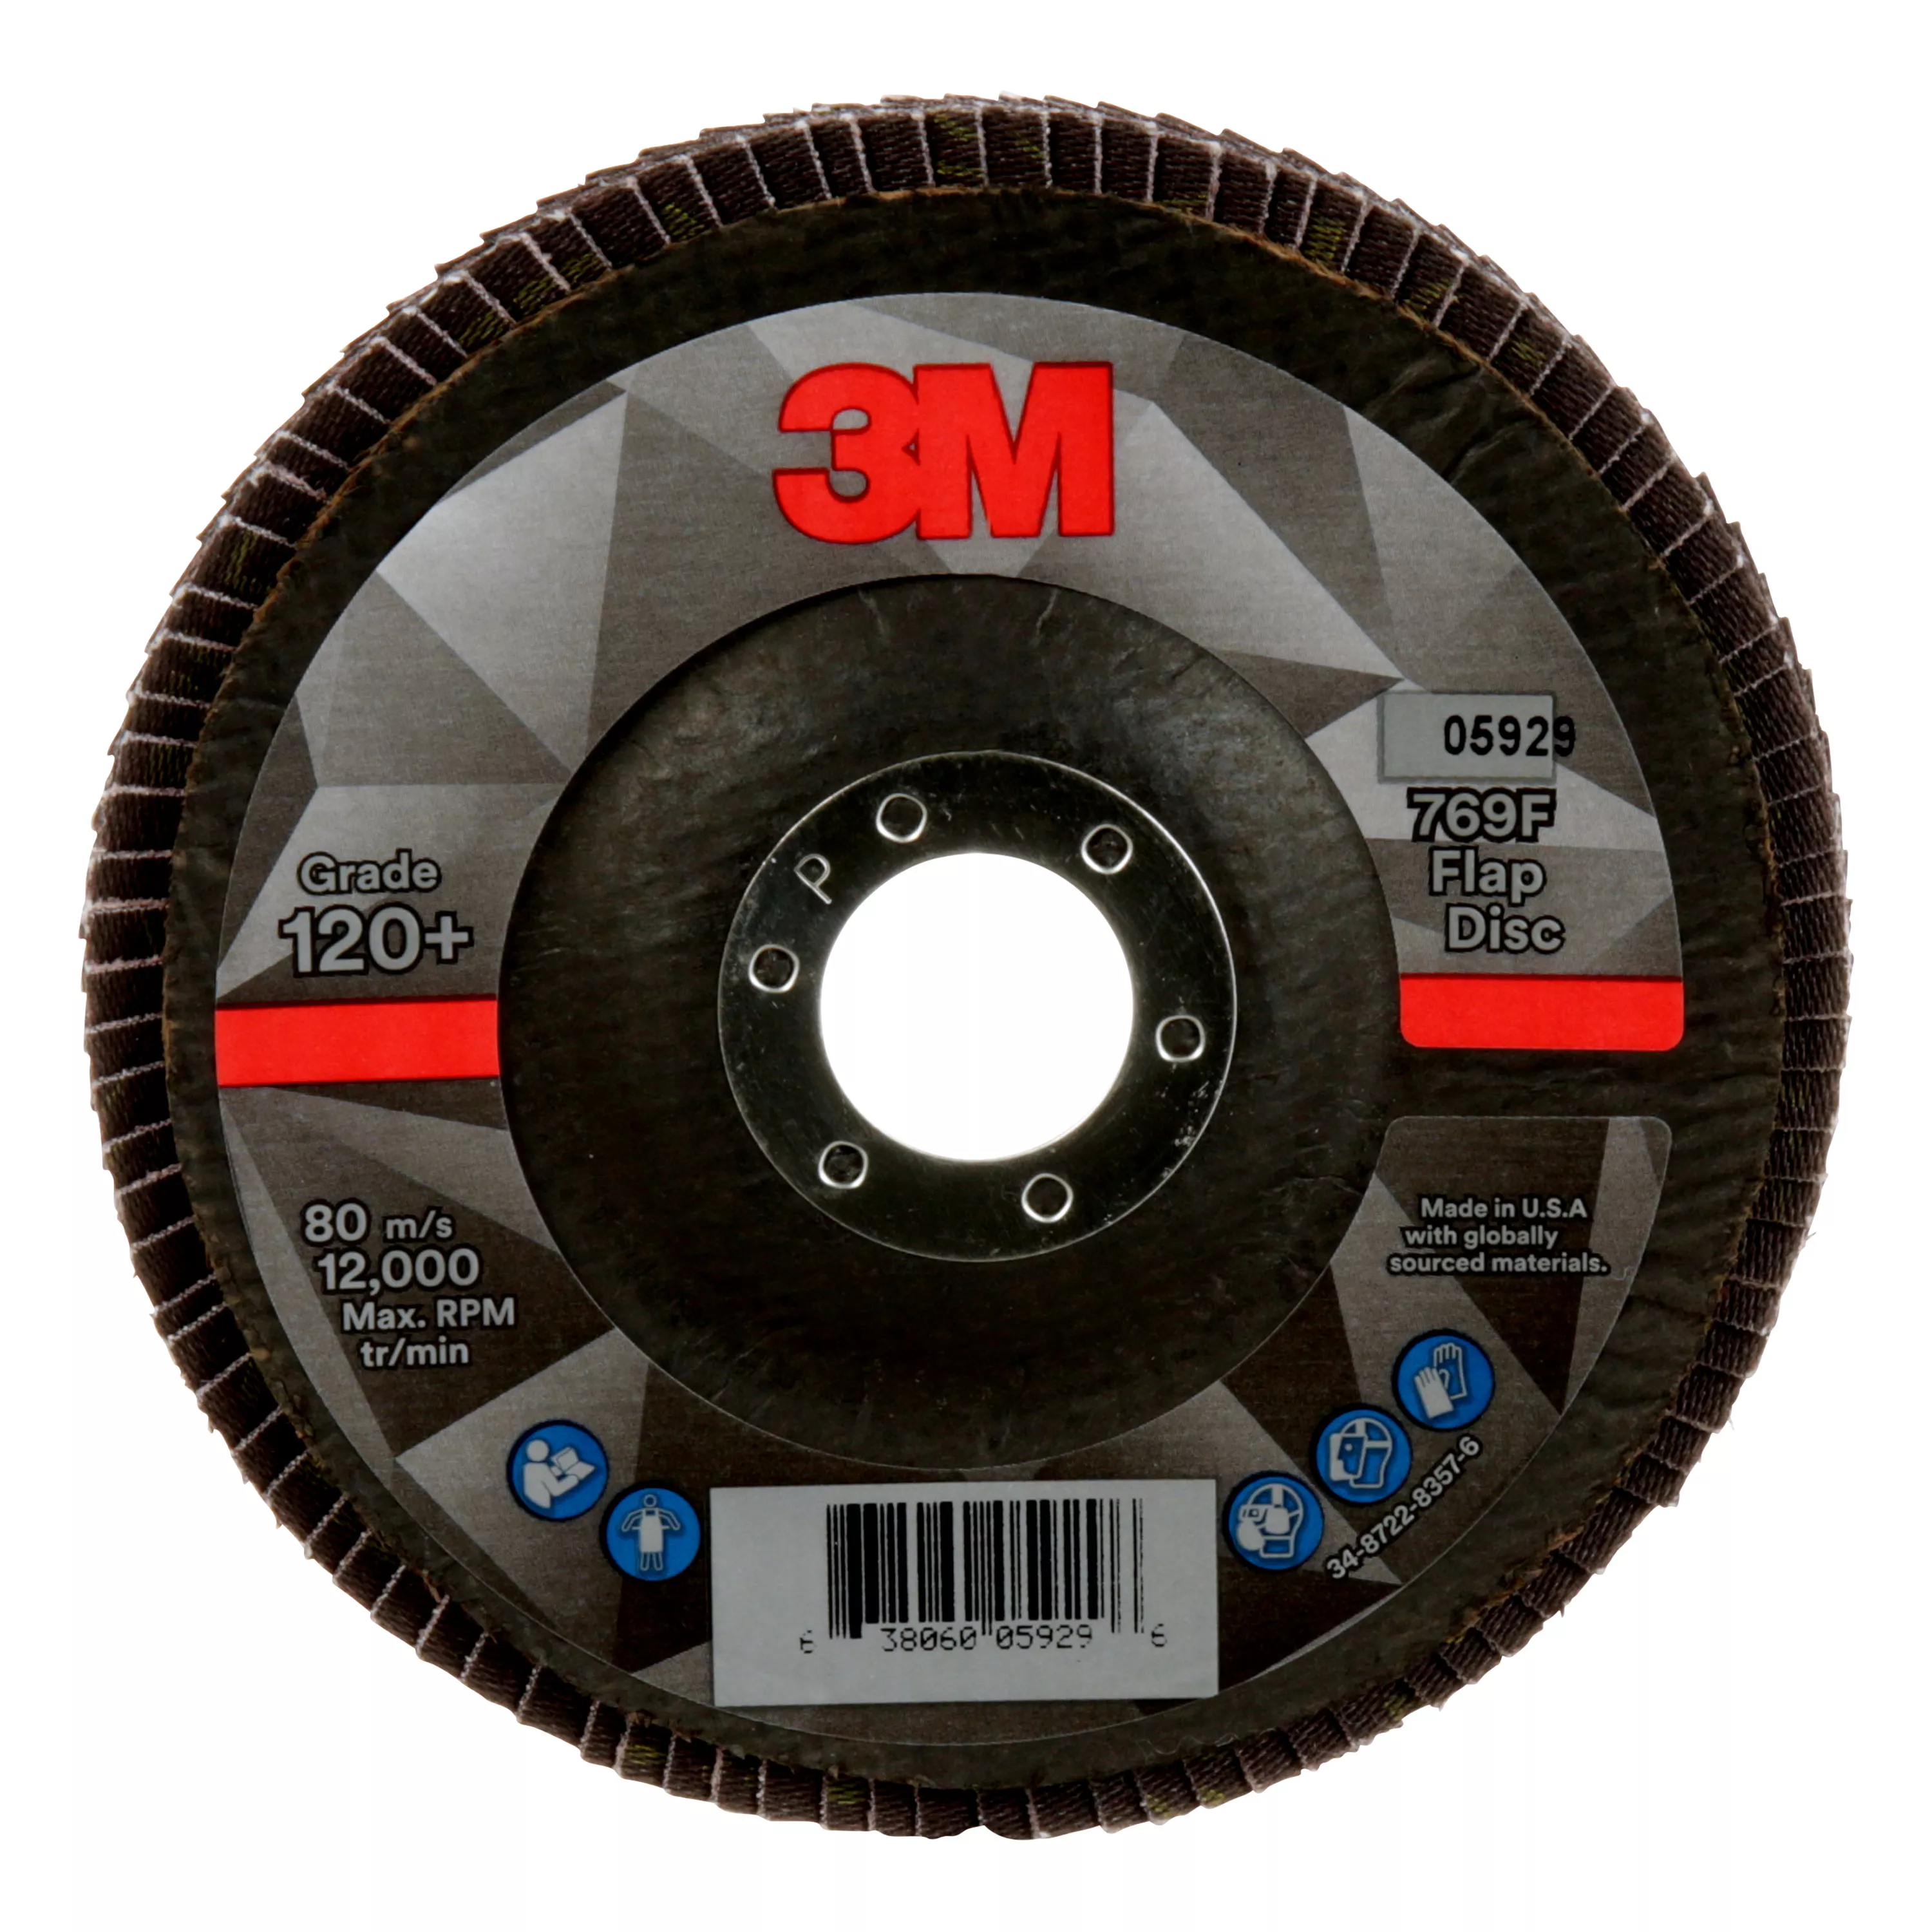 SKU 7100177972 | 3M™ Flap Disc 769F